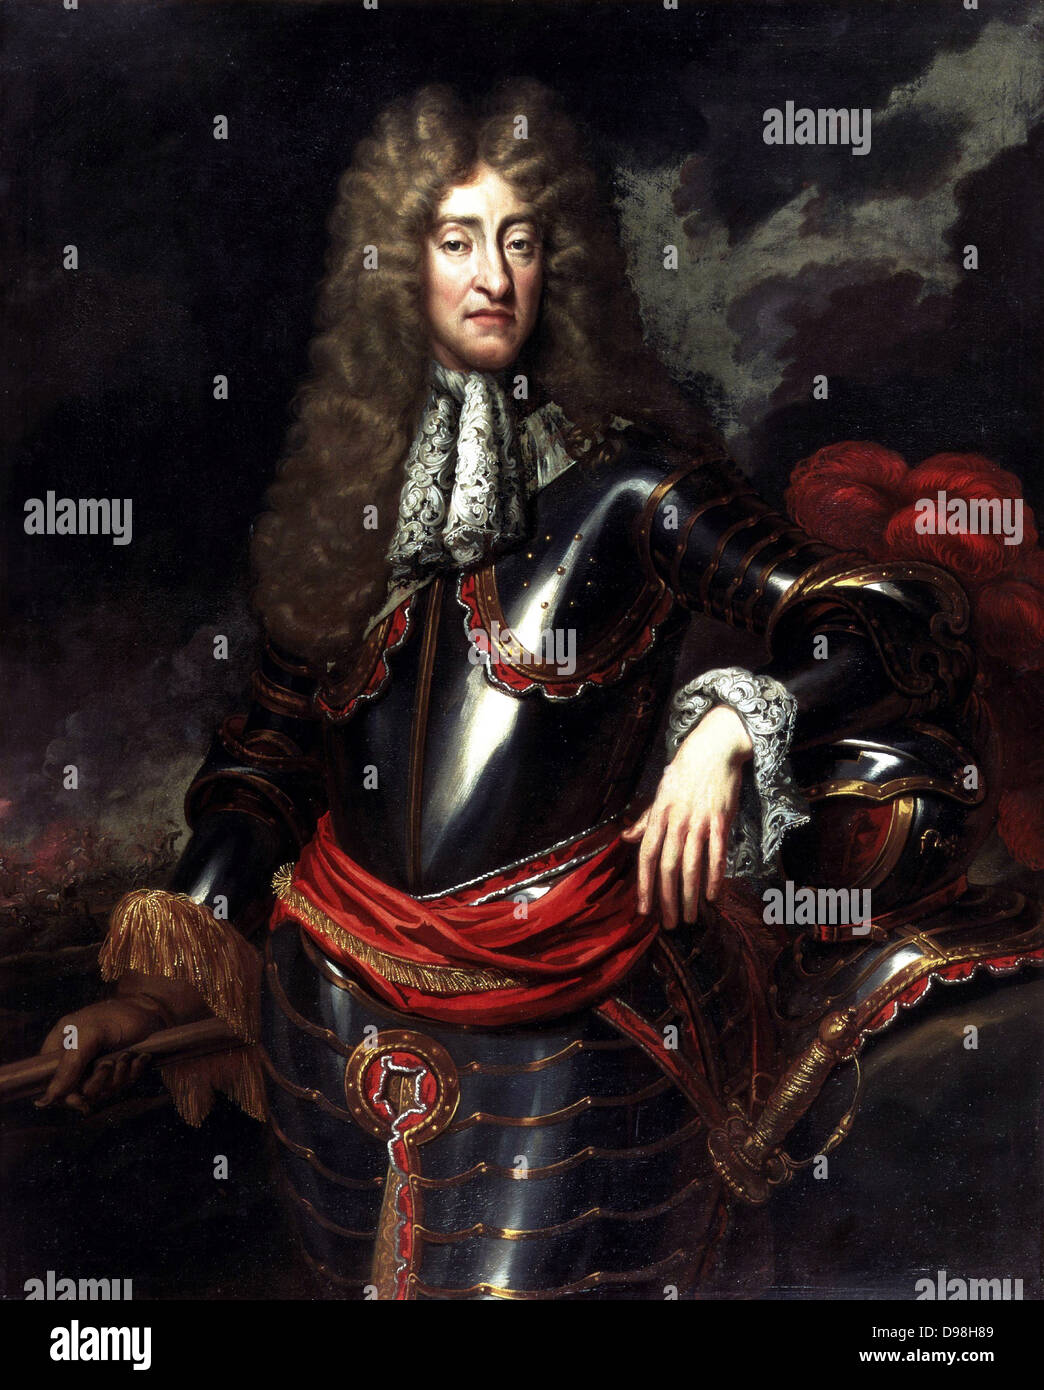 Giacomo II e VII (1633 - 1701), Re di Inghilterra e Irlanda come Giacomo II e re di Scozia come Giacomo VII, dal 1685 -1688 Foto Stock